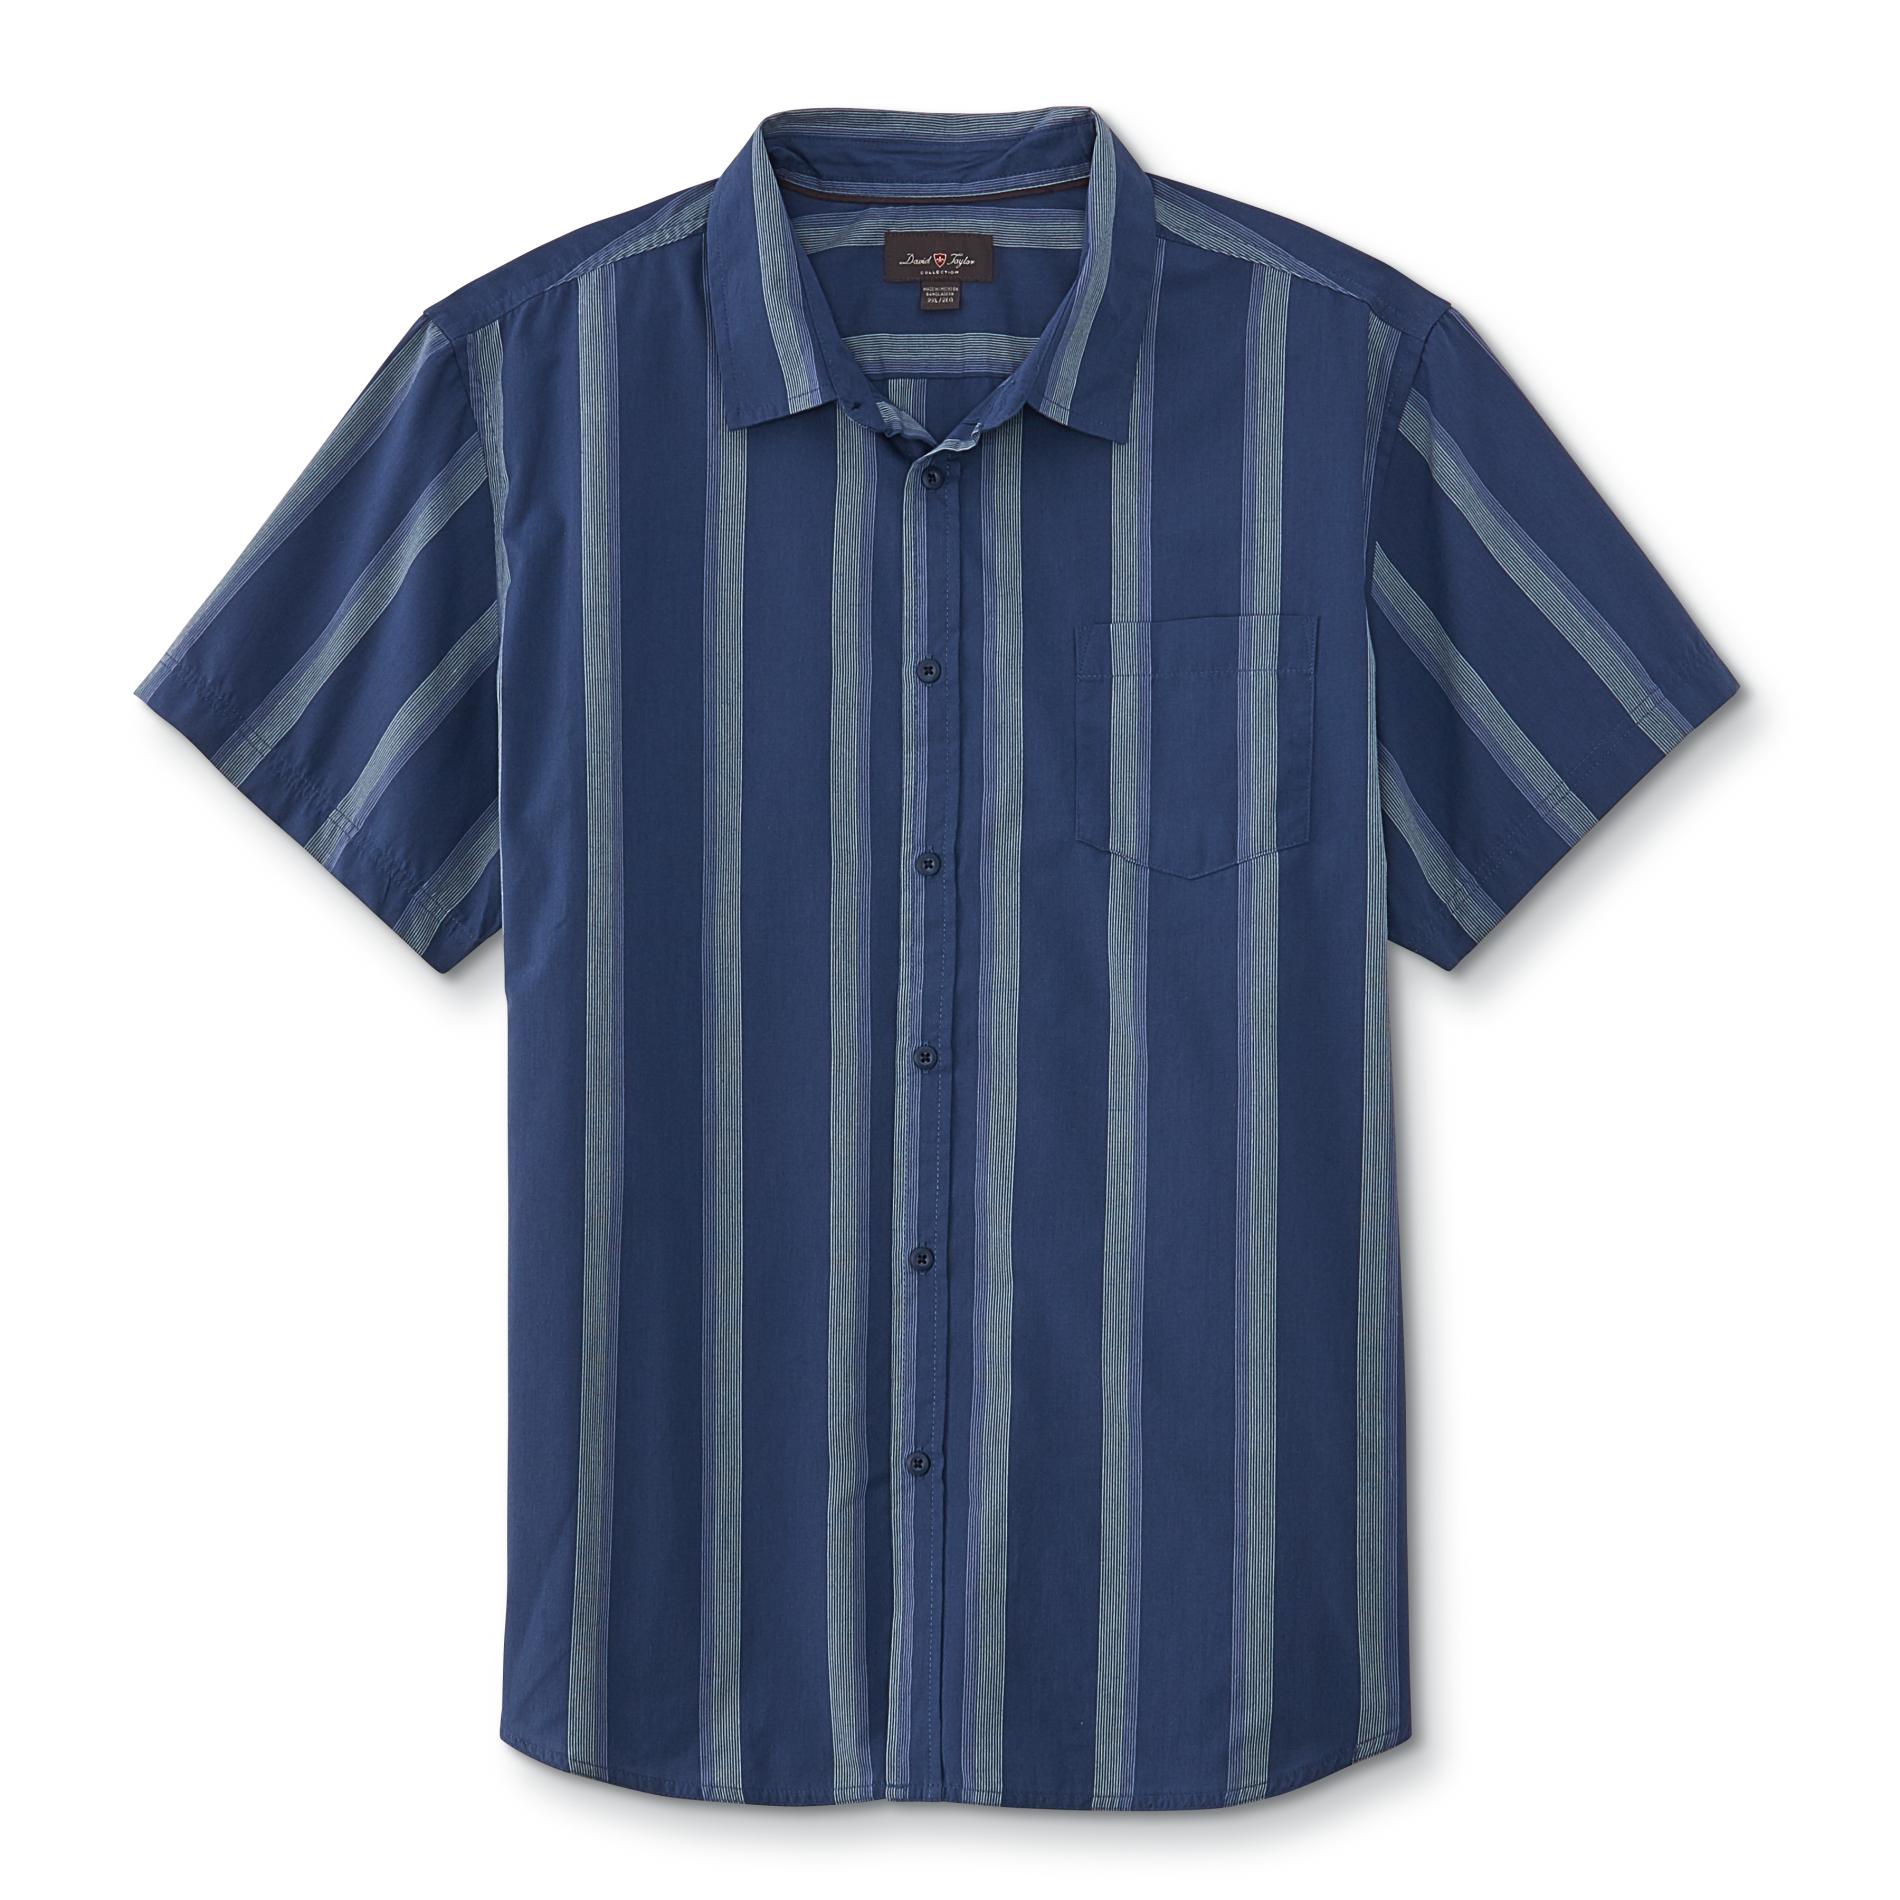 David Taylor Collection Men's Short-Sleeve Oxford Shirt - Striped